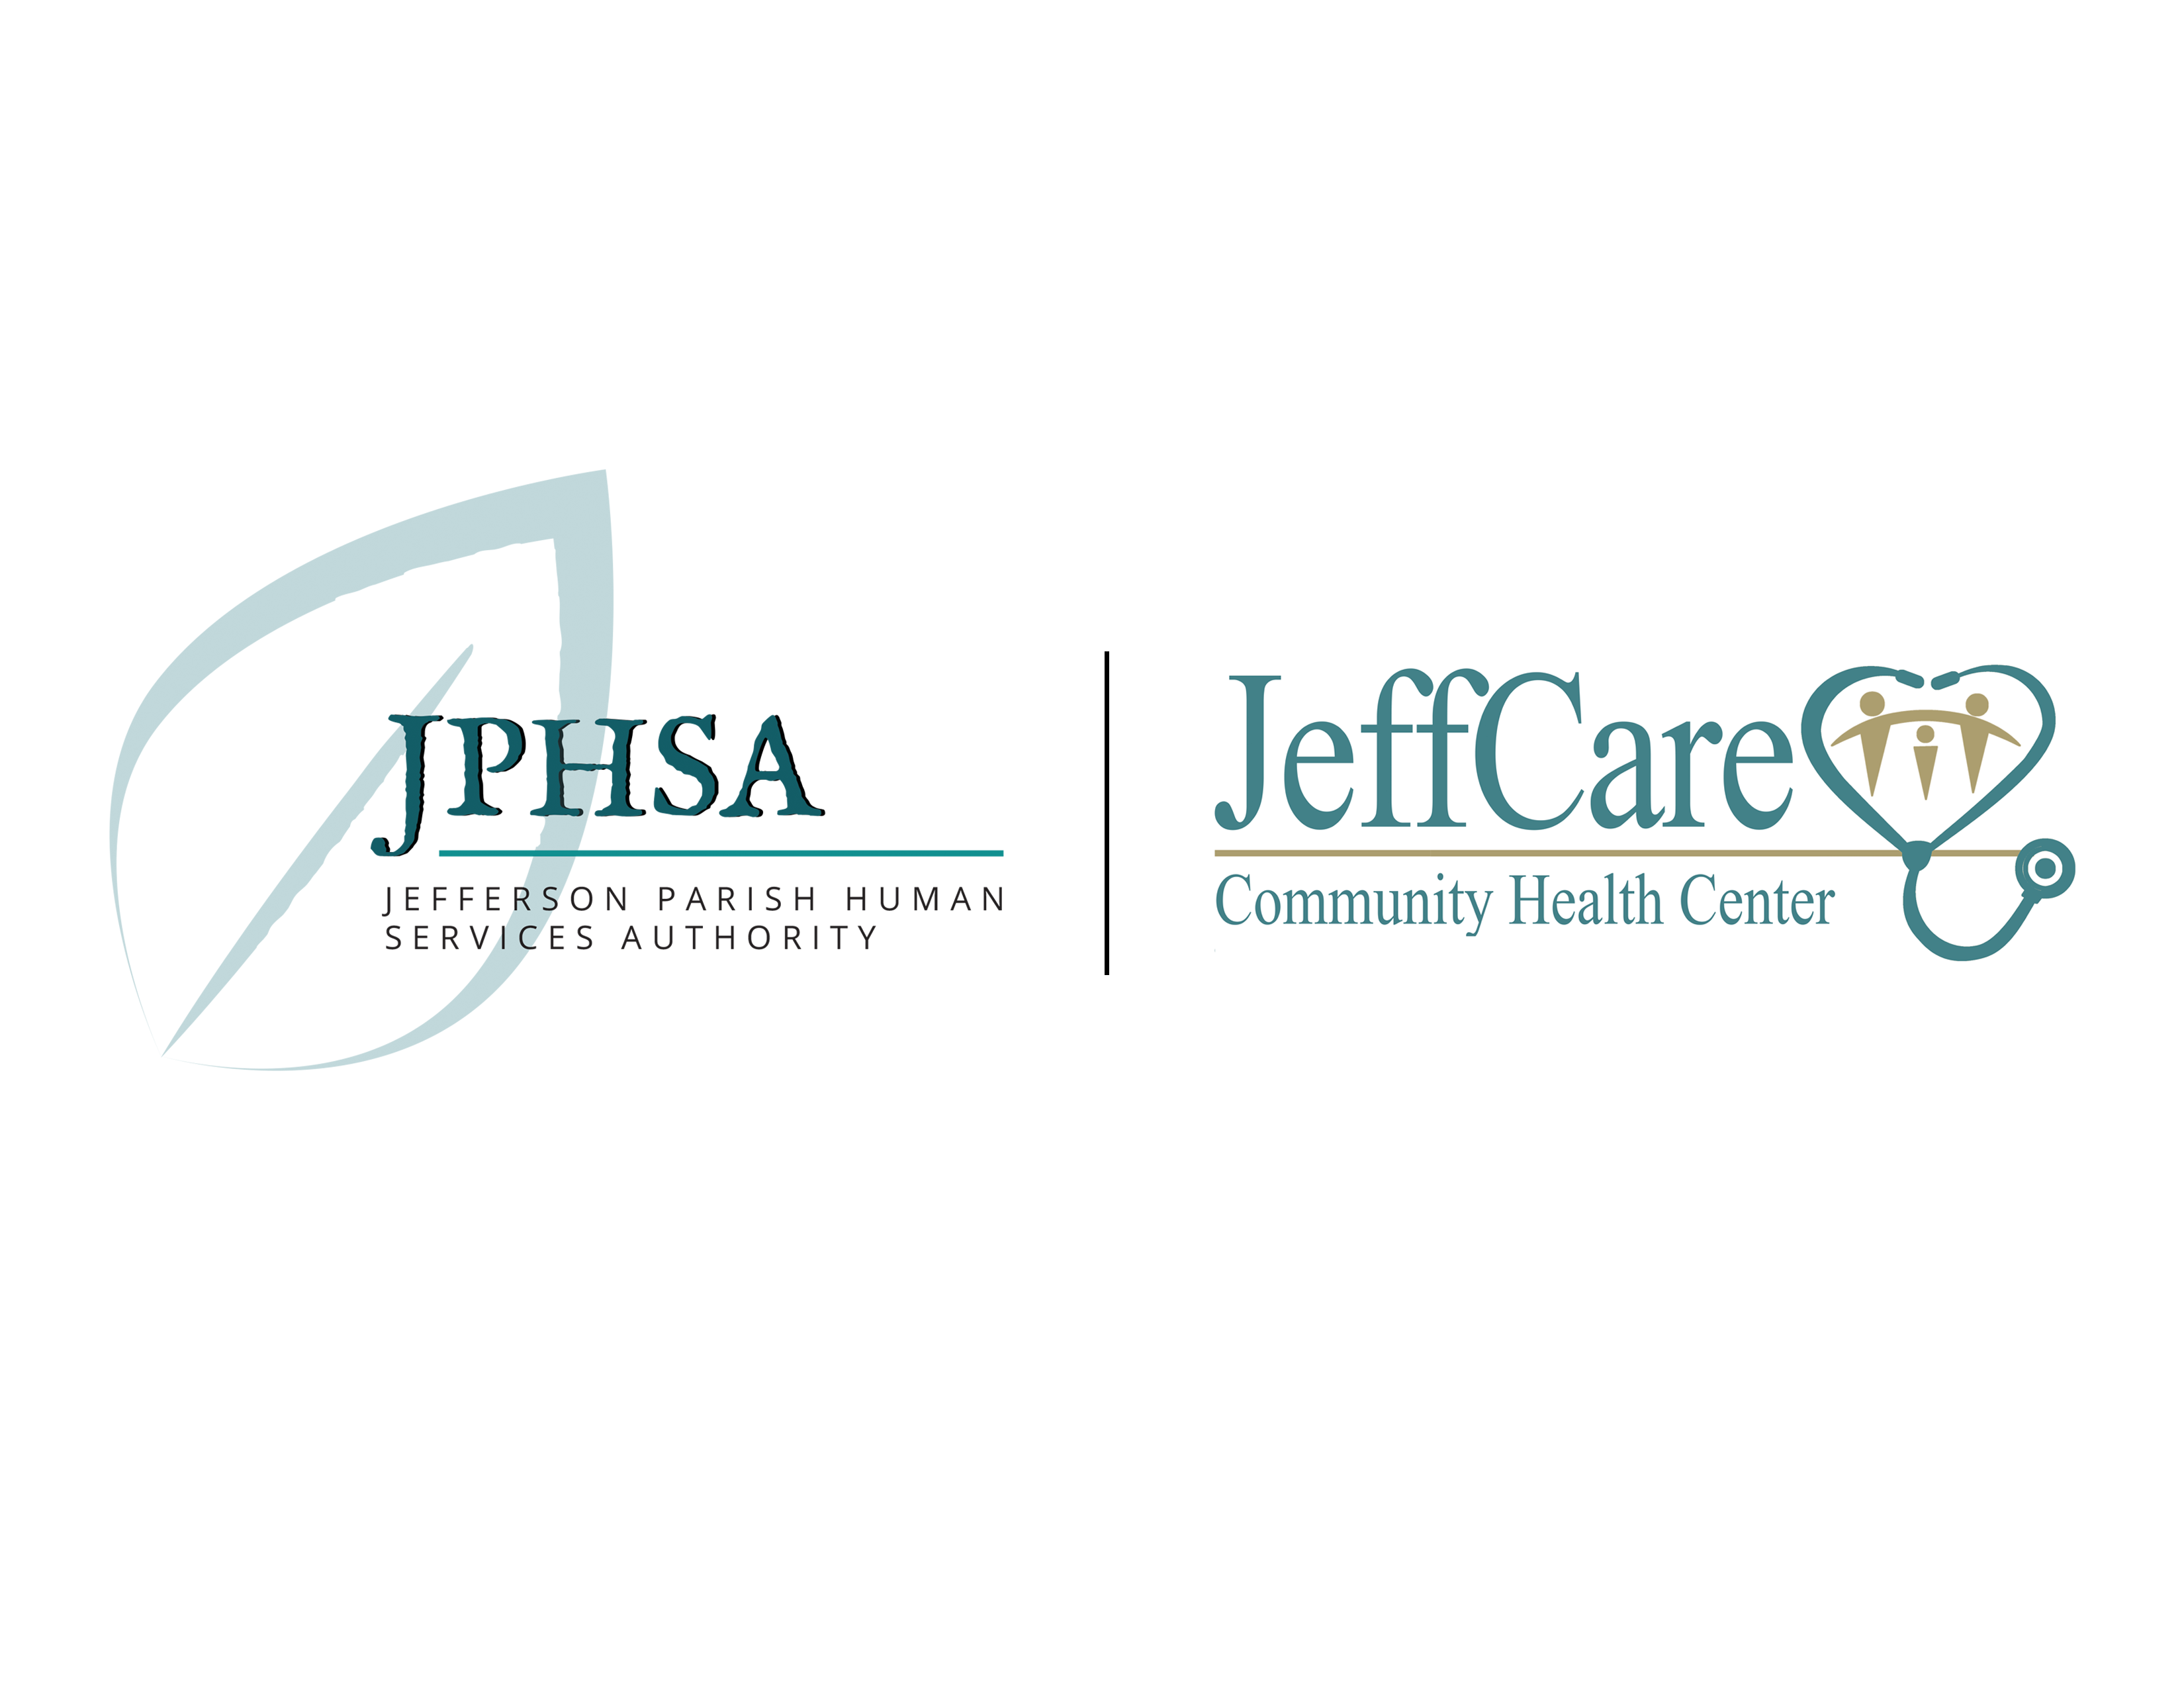 JeffCare Community Health Center at Jefferson Parish Human Services Authority